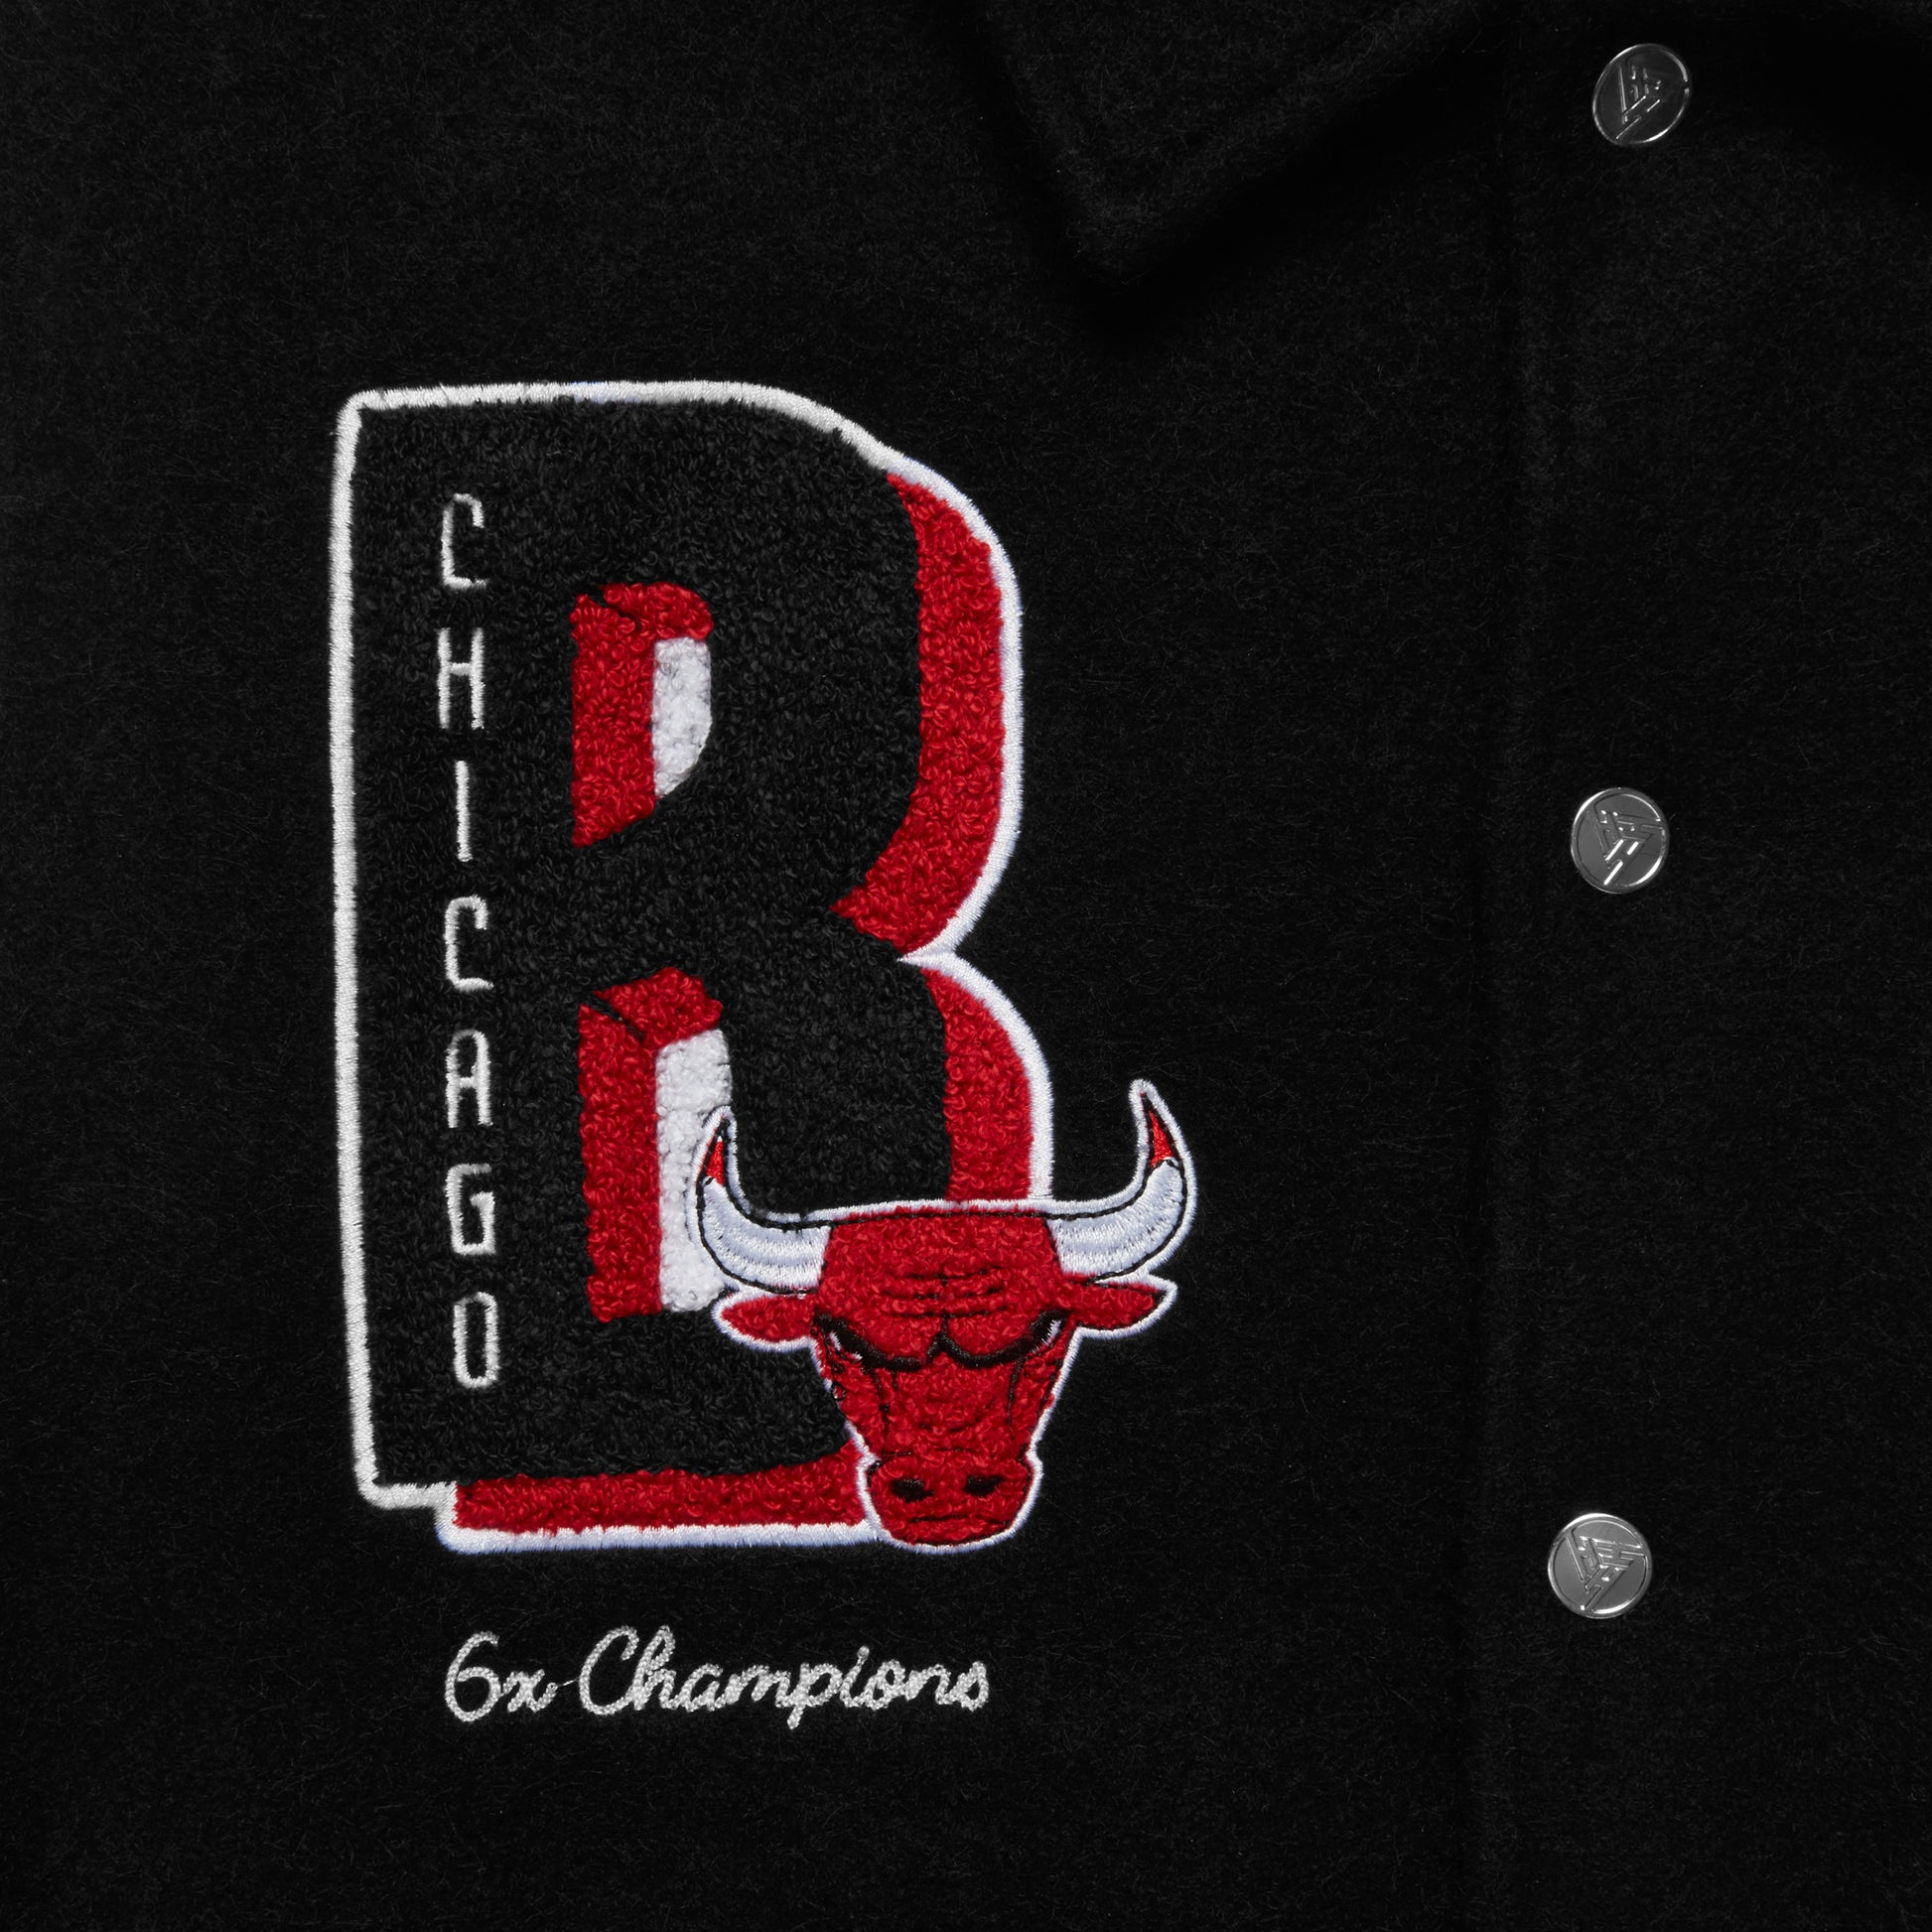 Wool/Leather Basketball Chicago Bulls Black Varsity Jacket